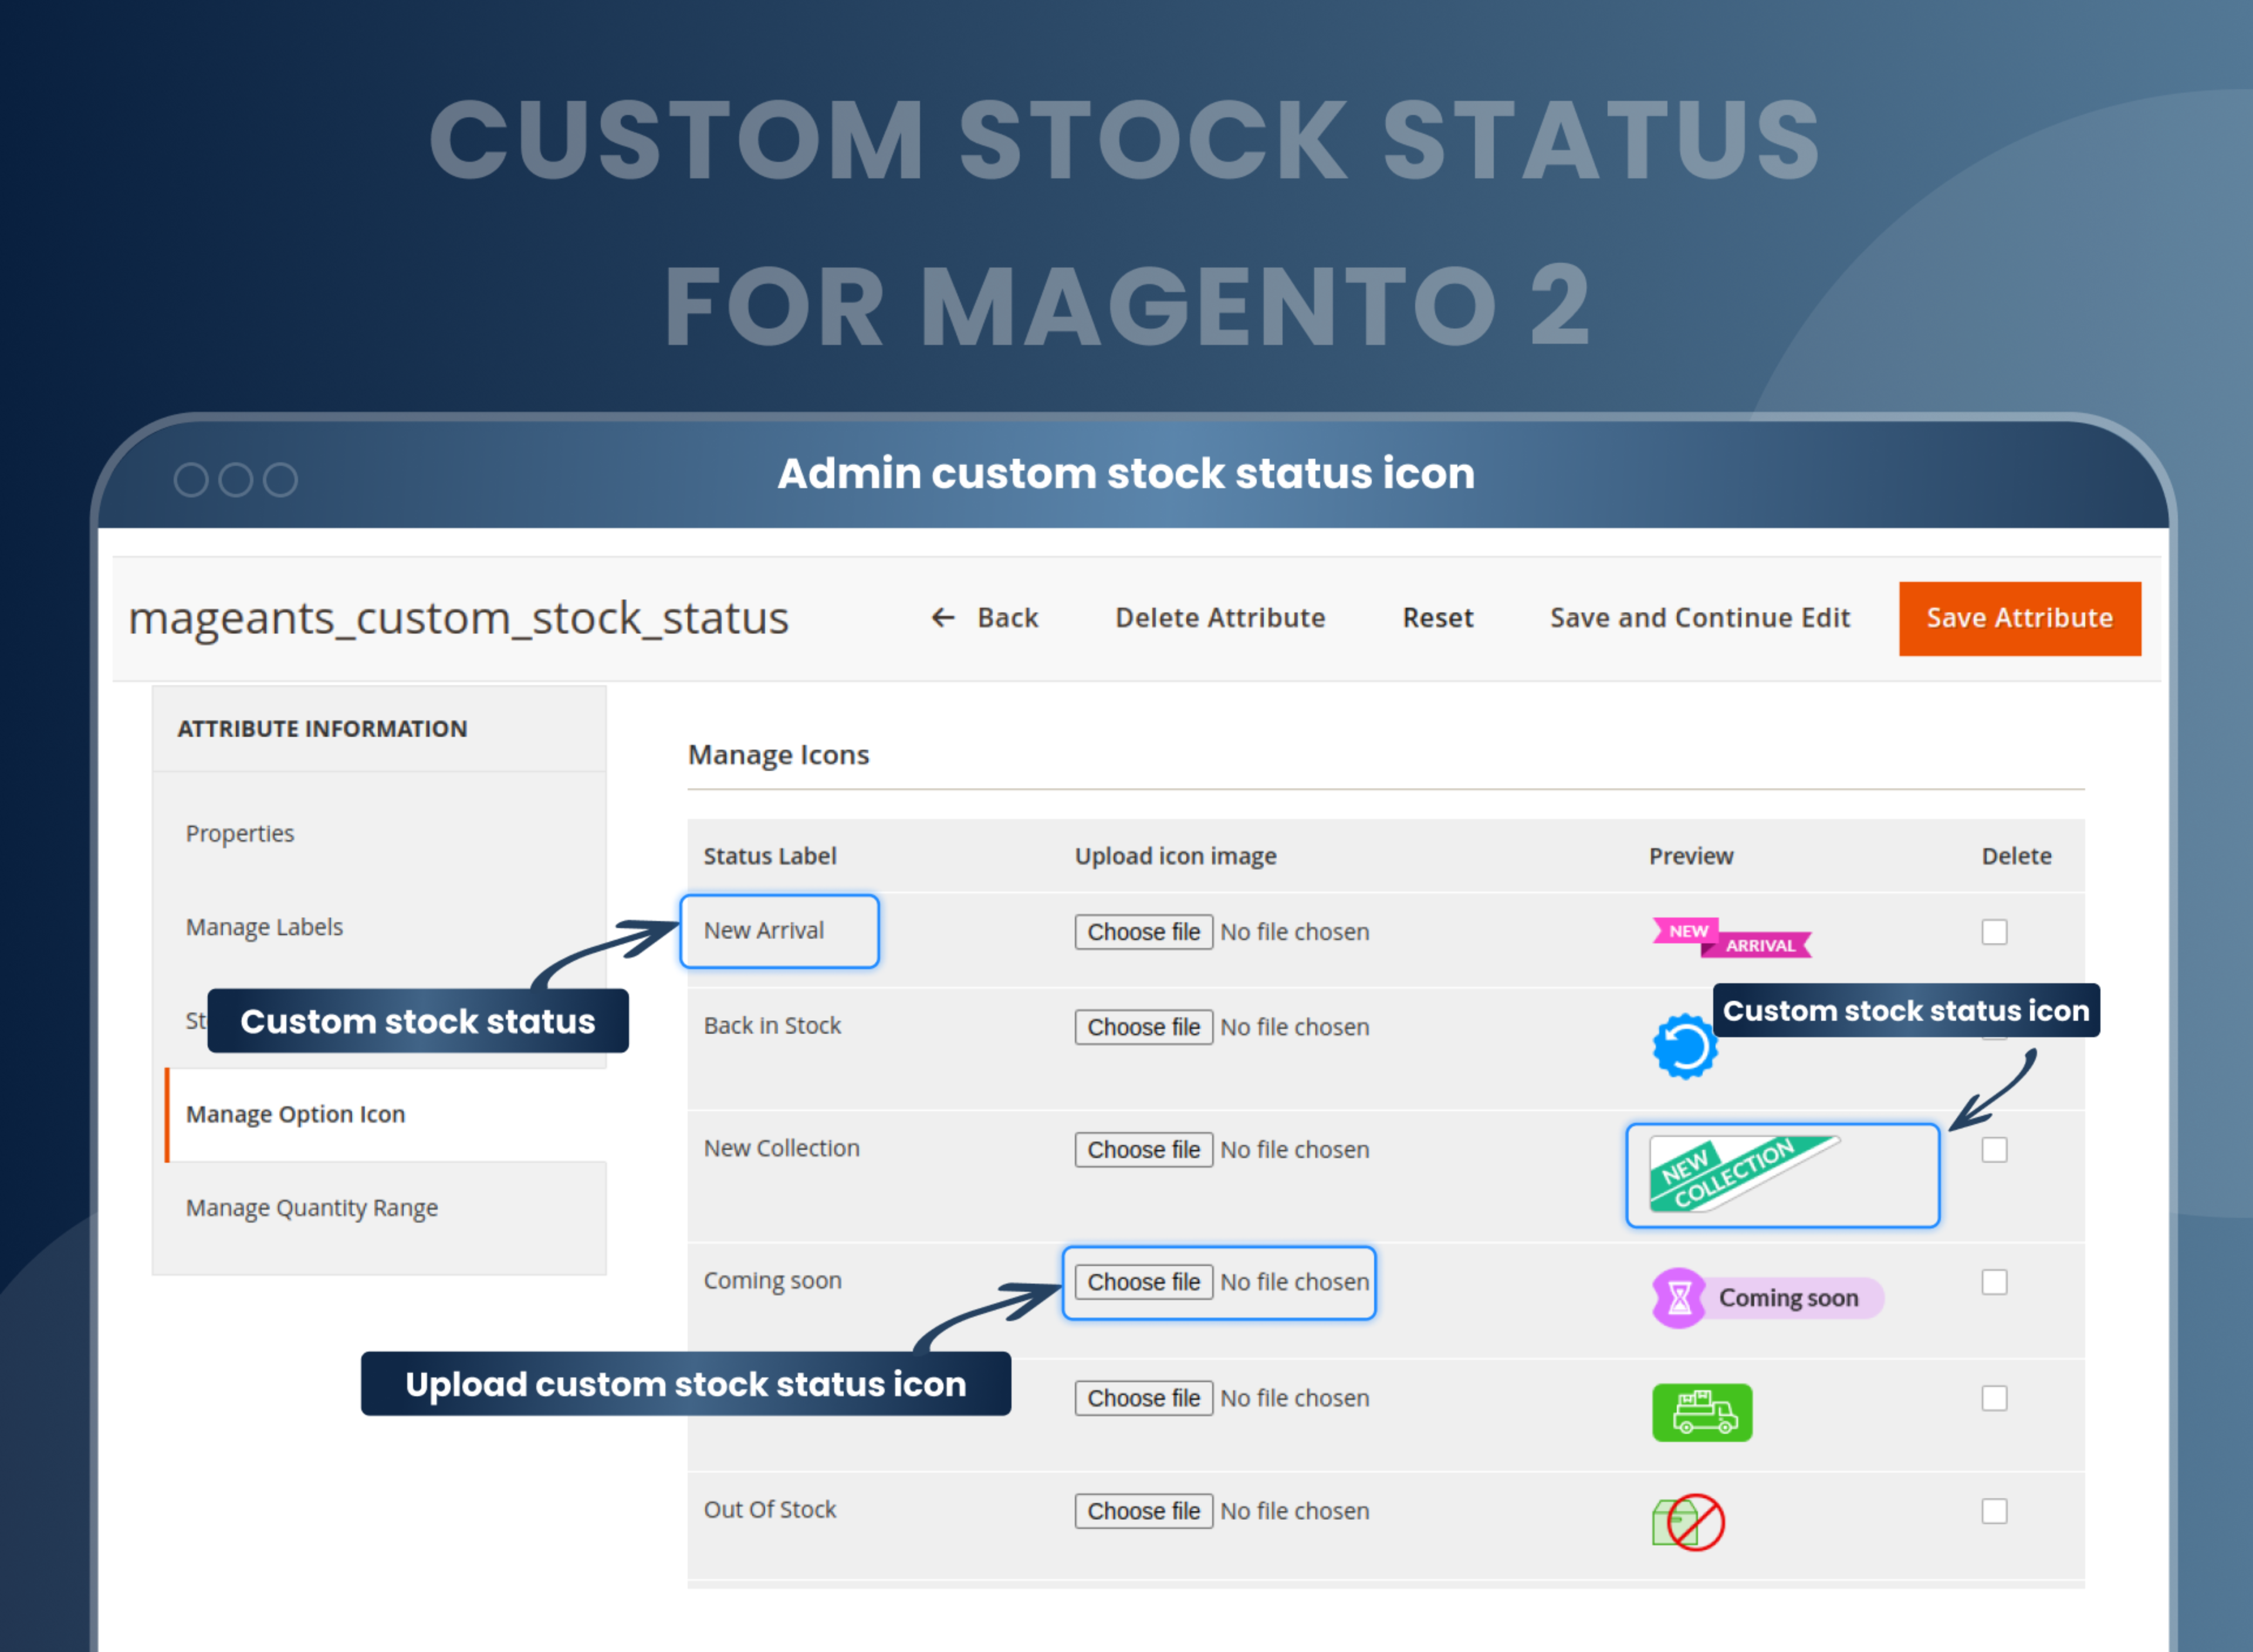  Admin custom stock status icon